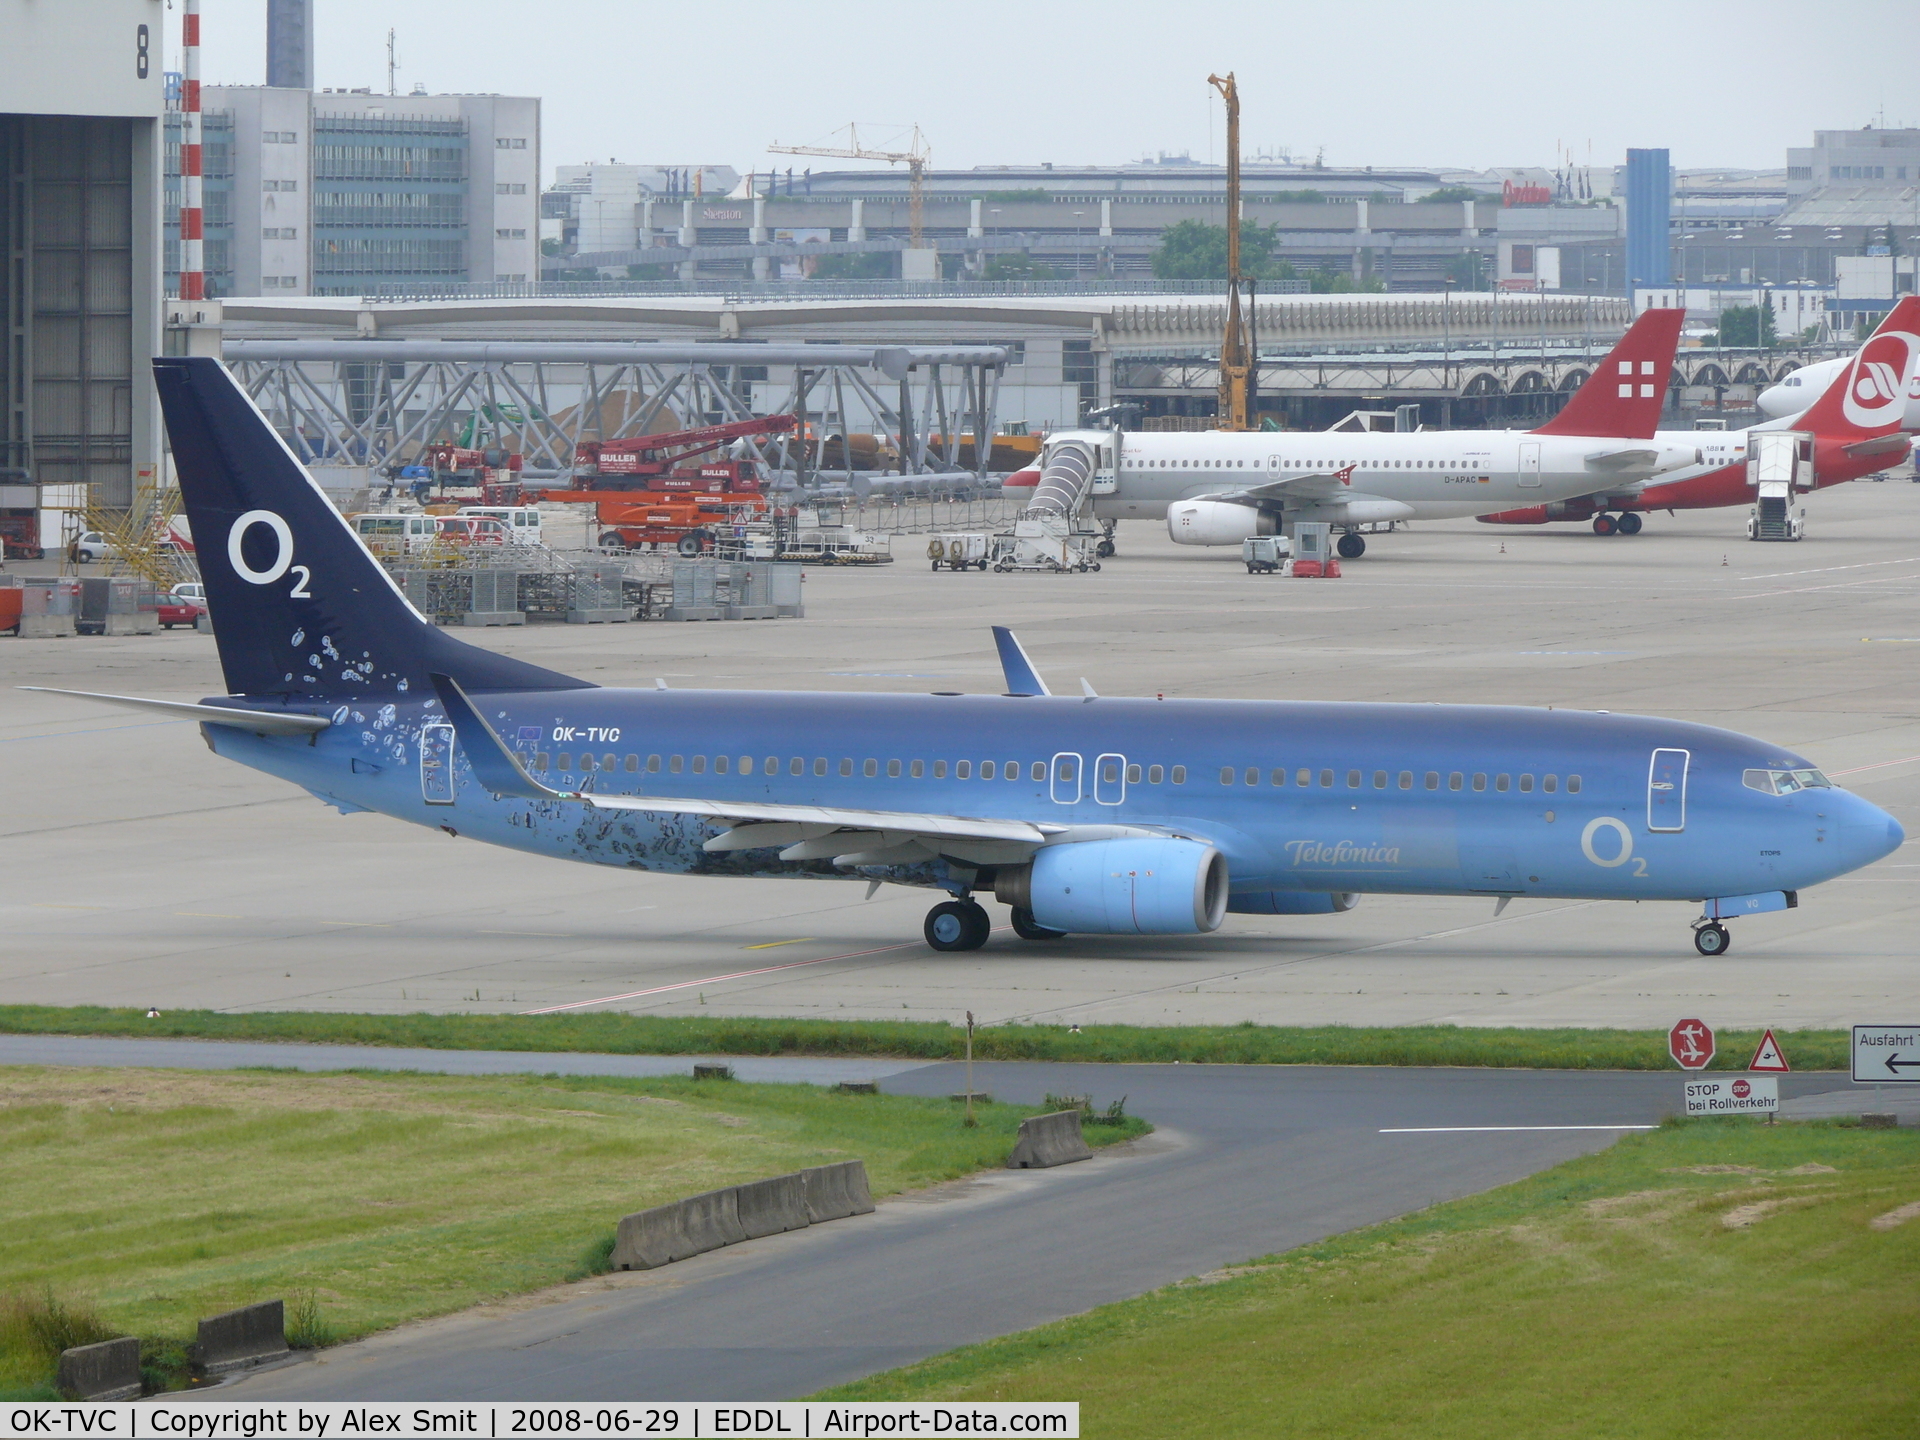 OK-TVC, 2001 Boeing 737-86Q C/N 30278, Boeing B737-86Q OK-TVC Travel Service in O2 Telefonica colors